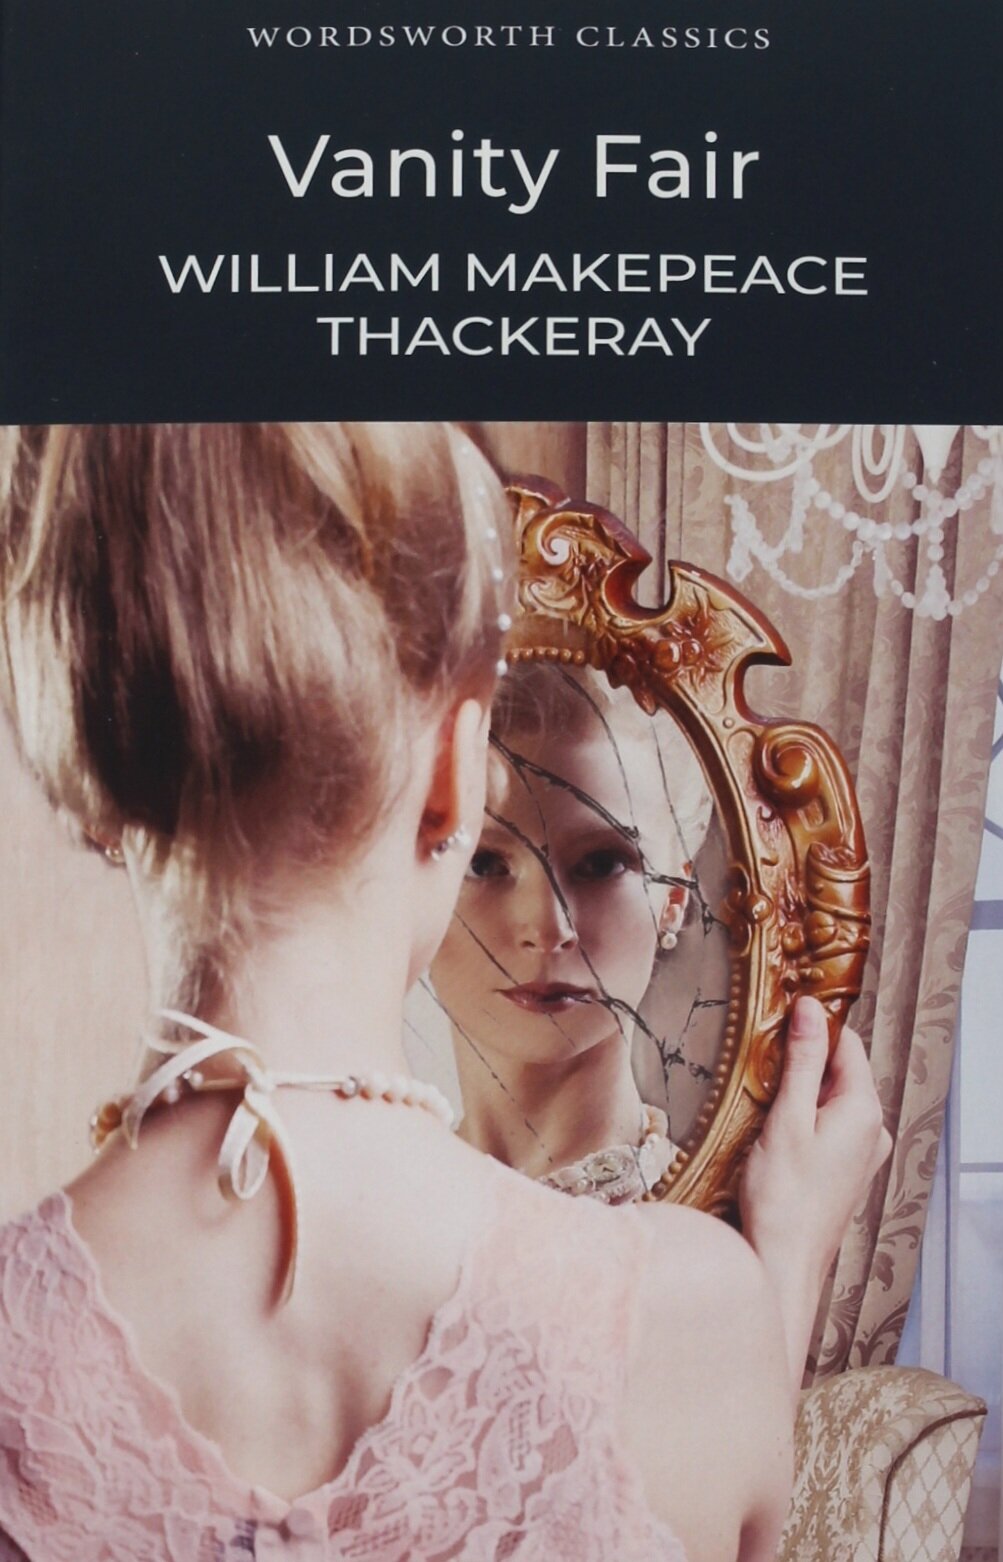 Vanity Fair (Thackeray William Makepeace, Теккерей Уильям Мейкпис) - фото №4